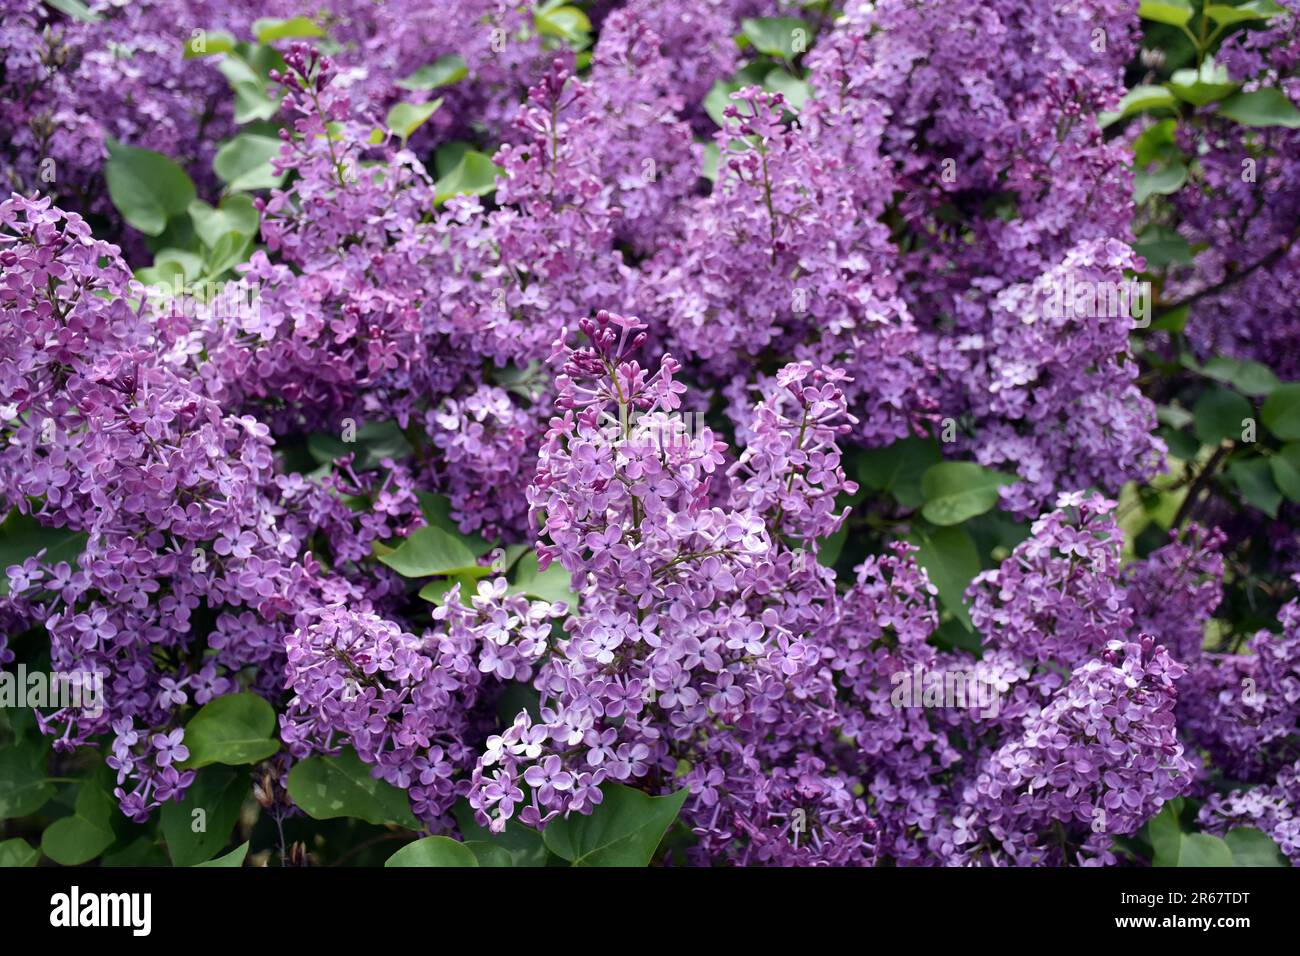 Purple flowers of the dwarf Korean lilac shrub Syringa meyeri blooming in spring. Stock Photo